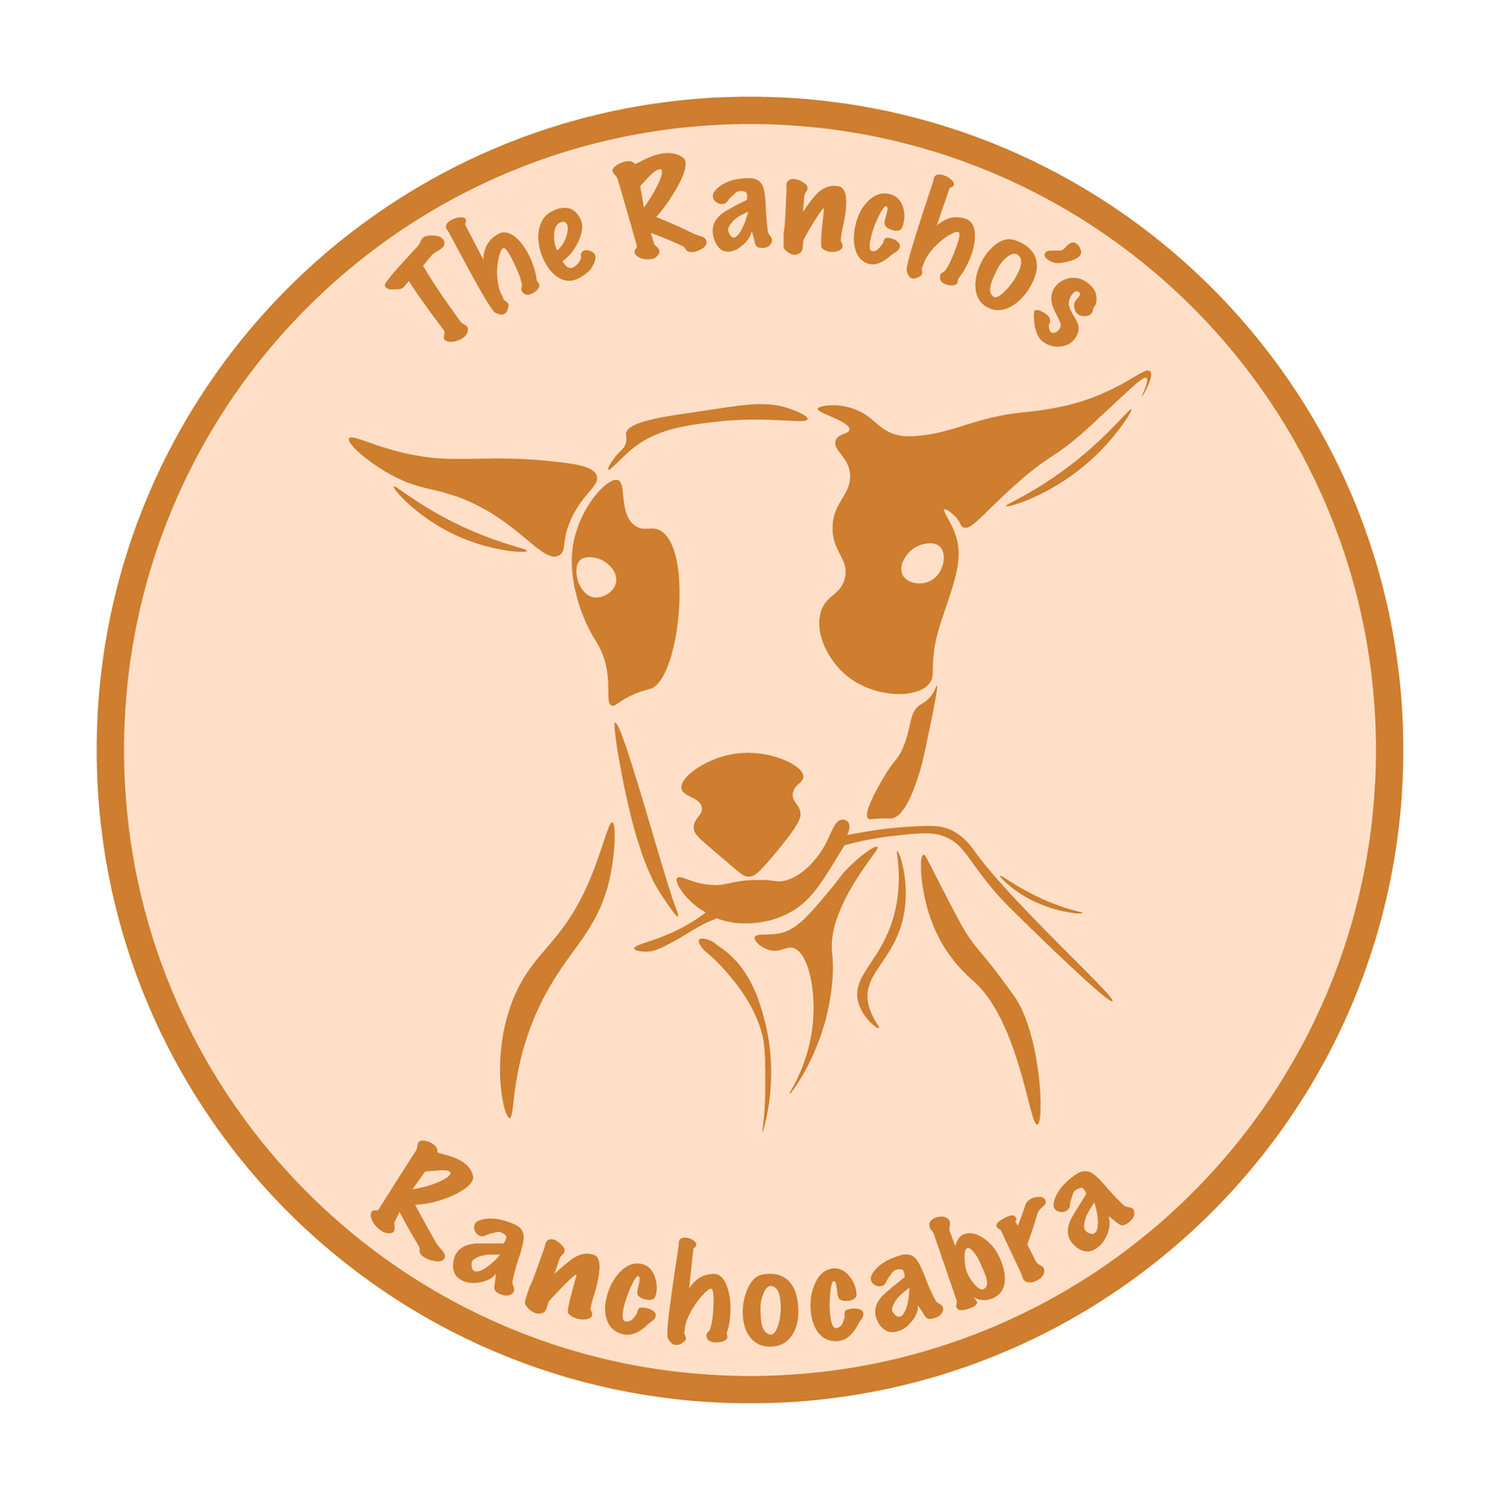 The Rancho